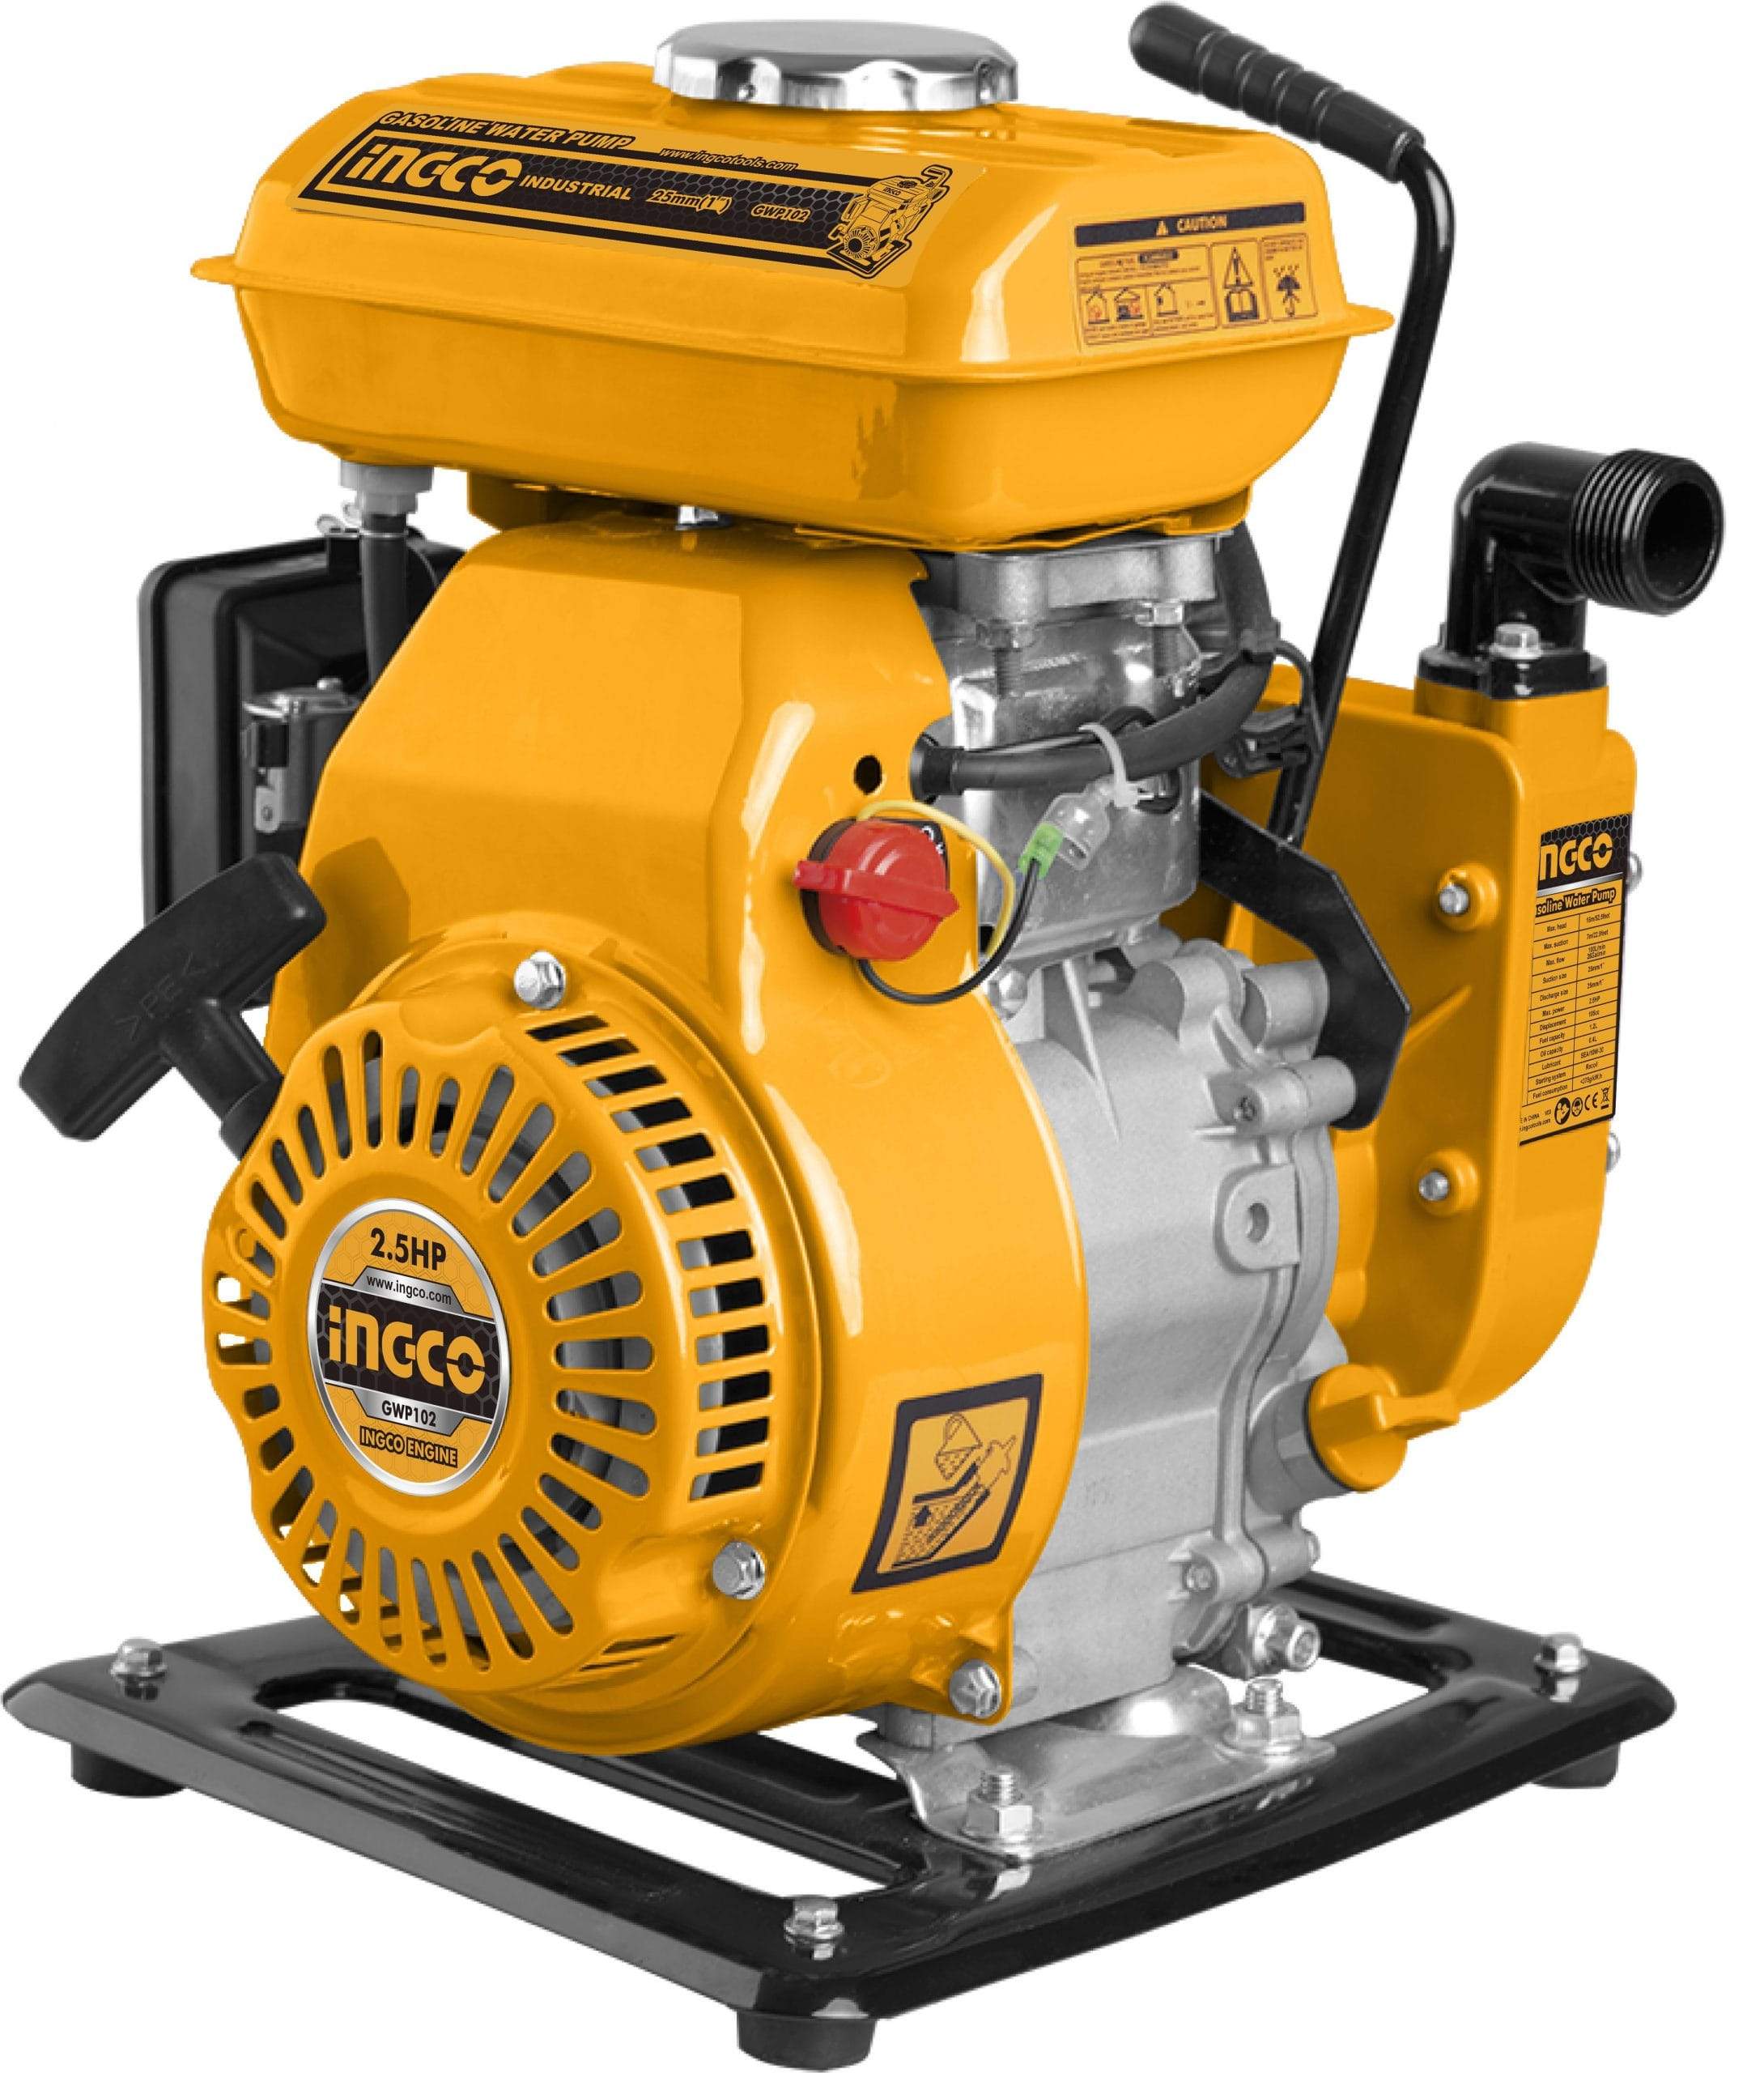 Ingco Gasoline Water Pump 2.5HP 100L/min - GWP102 | Supply Master | Accra, Ghana Tools Building Steel Engineering Hardware tool